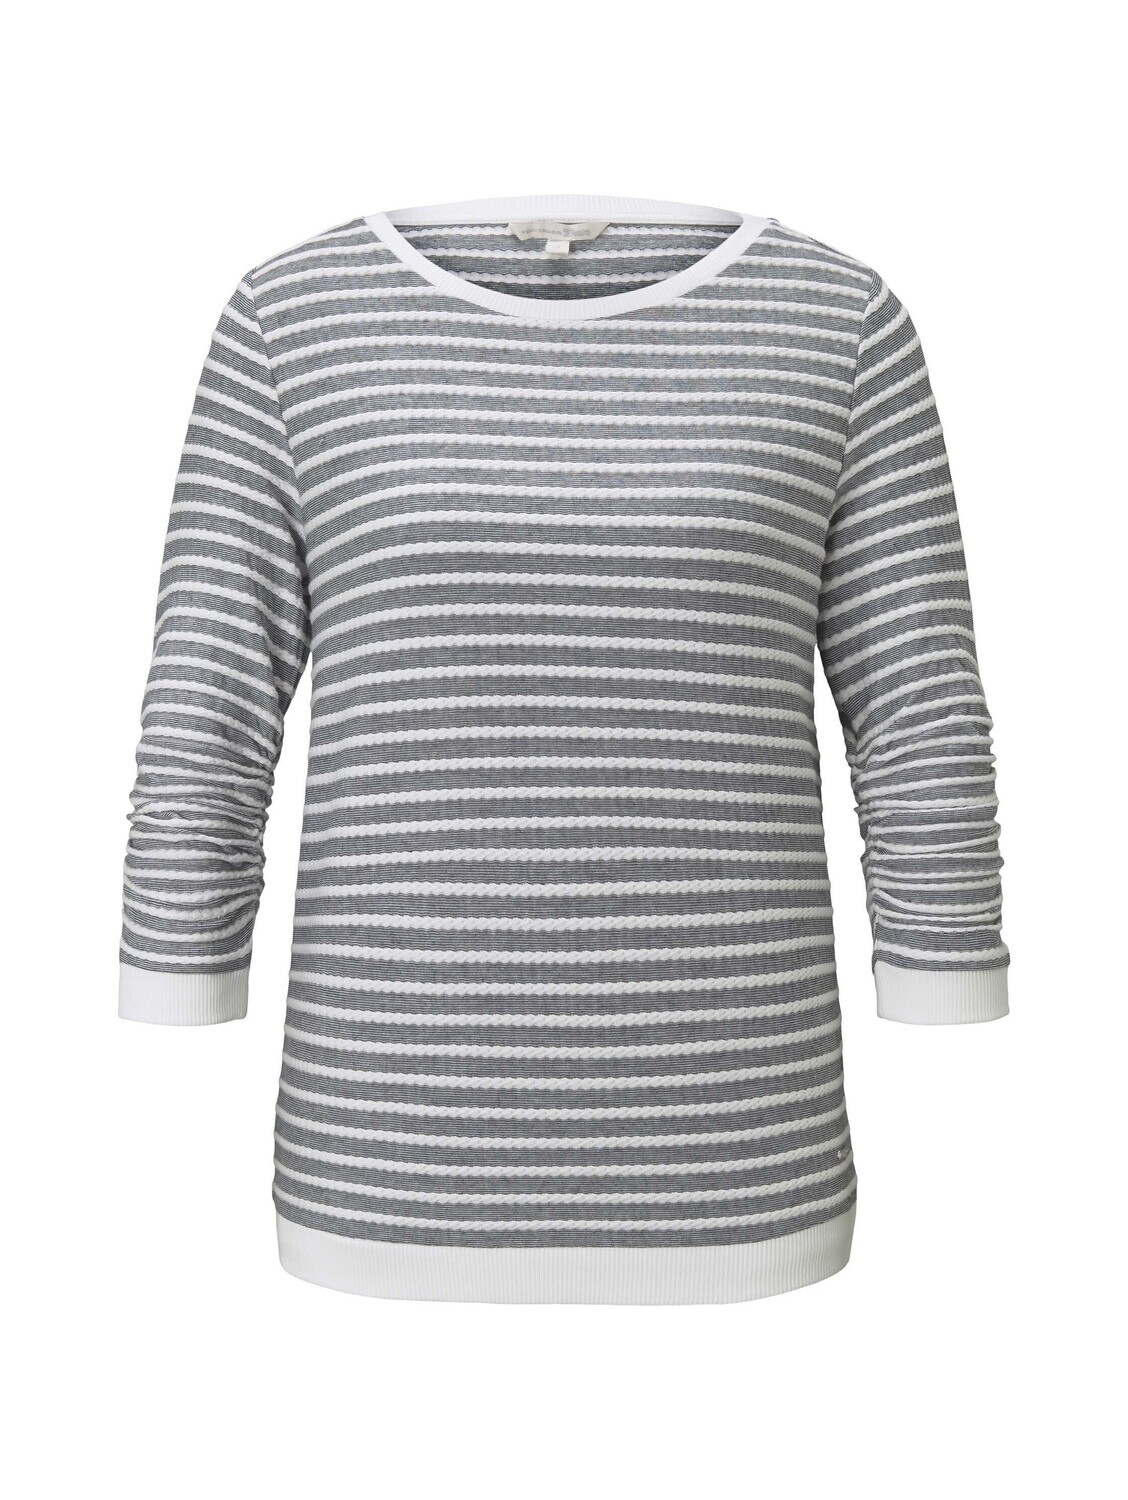 Tom Tailor gestreepte jacquard sweater, blue white structured stripe